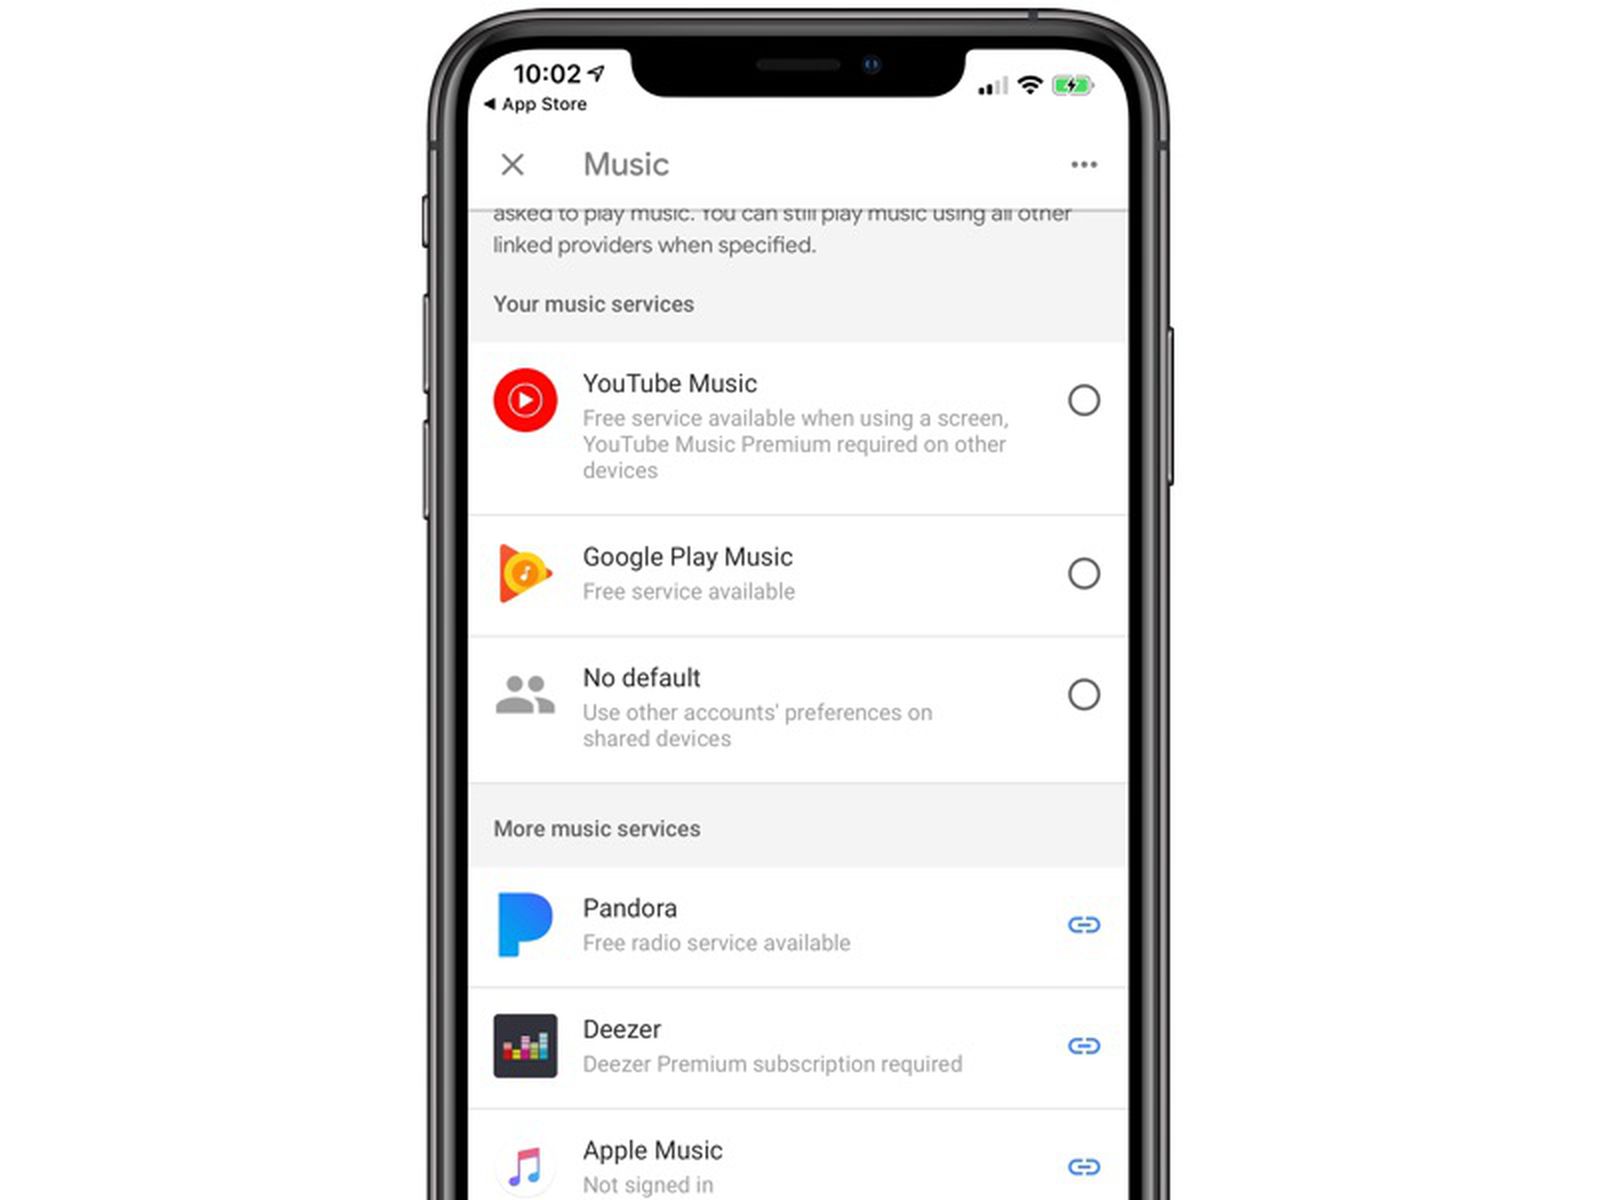 Says Bug Apple Music to in Google Home App [Updated] - MacRumors